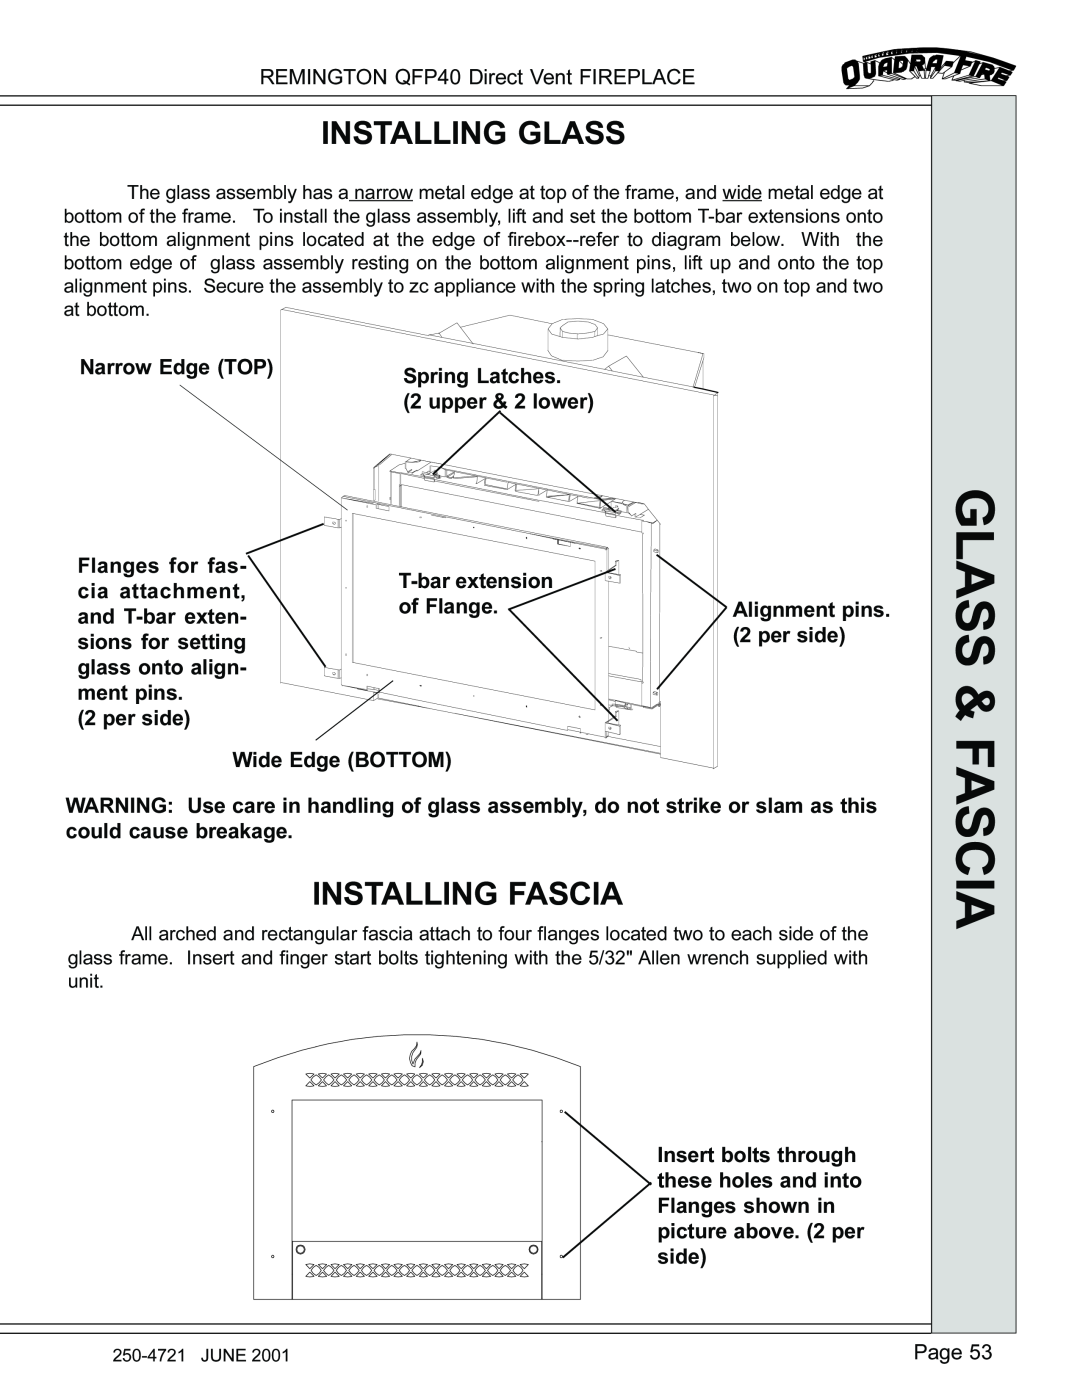 Remington QFP40 manual Installing Glass, Installing Fascia 